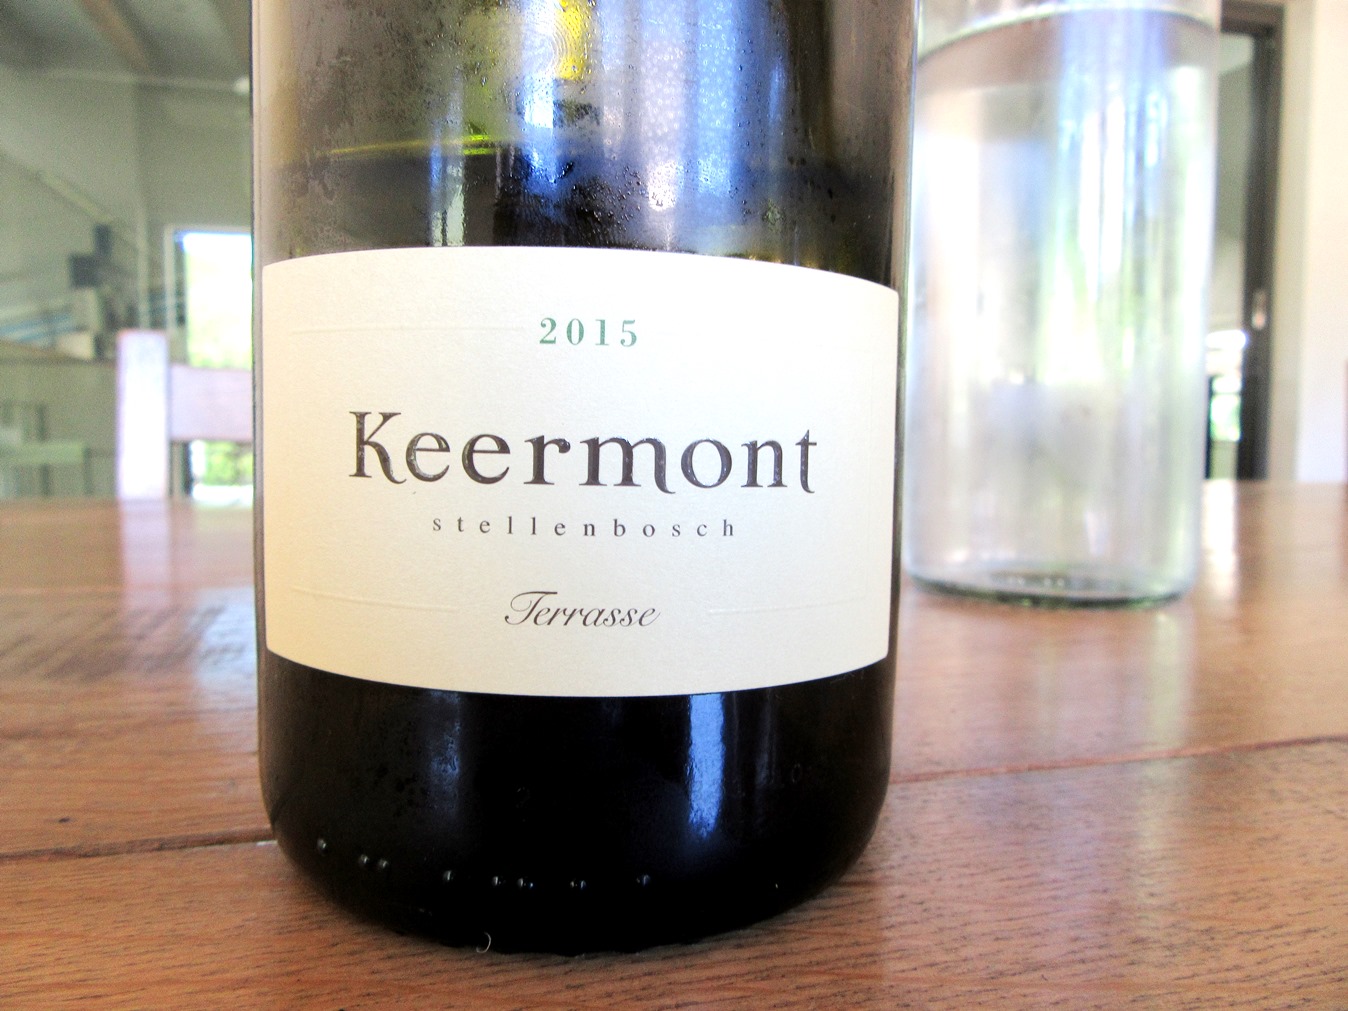 Keermont, Terrasse 2015, Stellenbosch, South Africa, Wine Casual